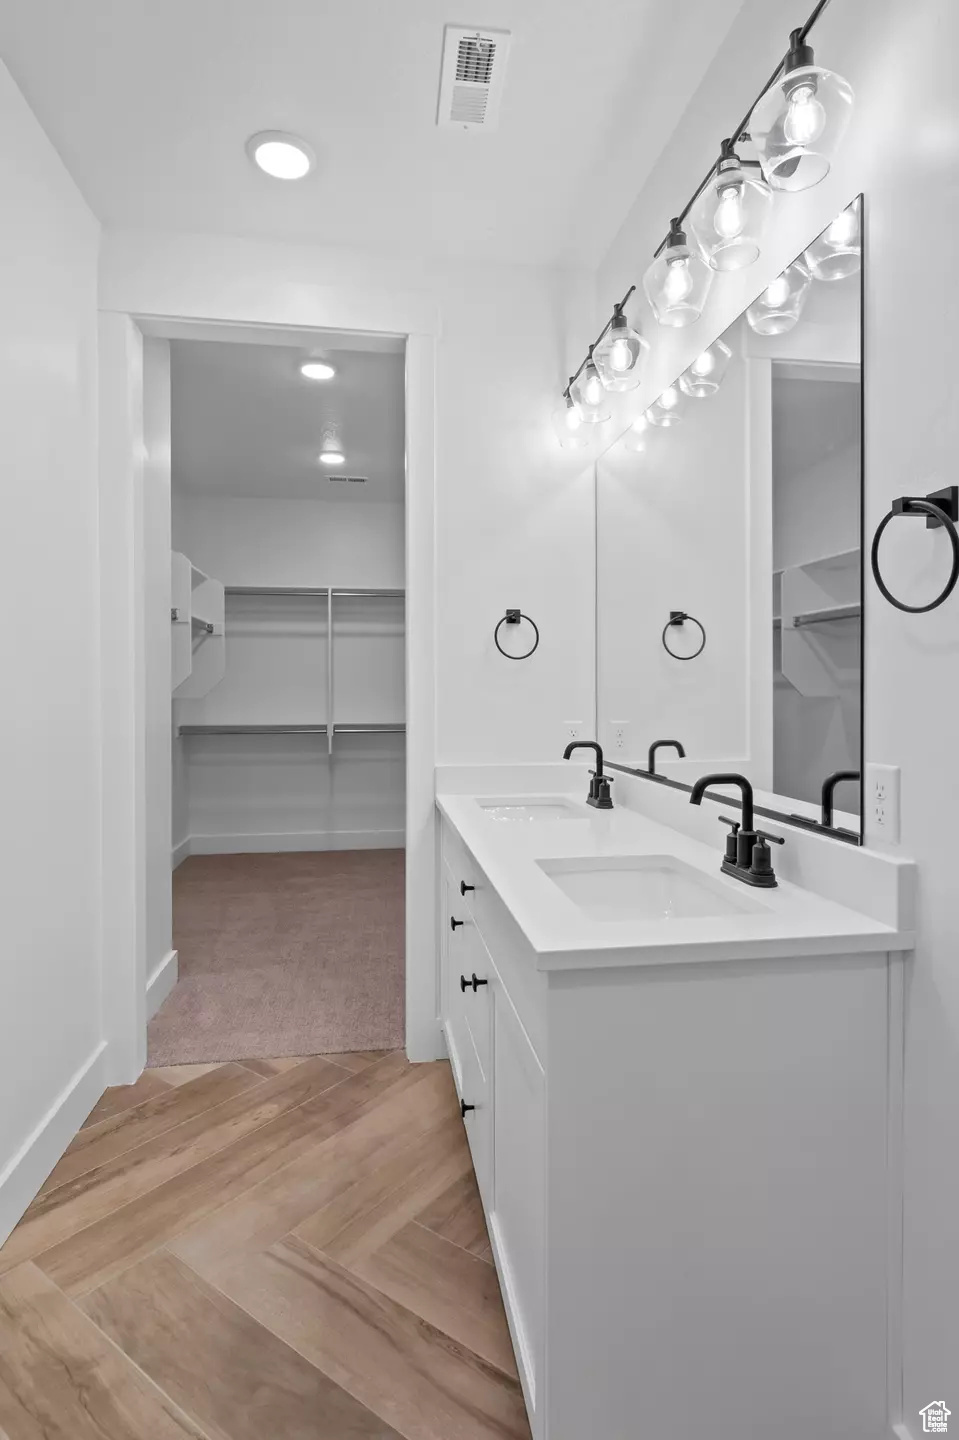 Bathroom featuring oversized vanity and parquet floors